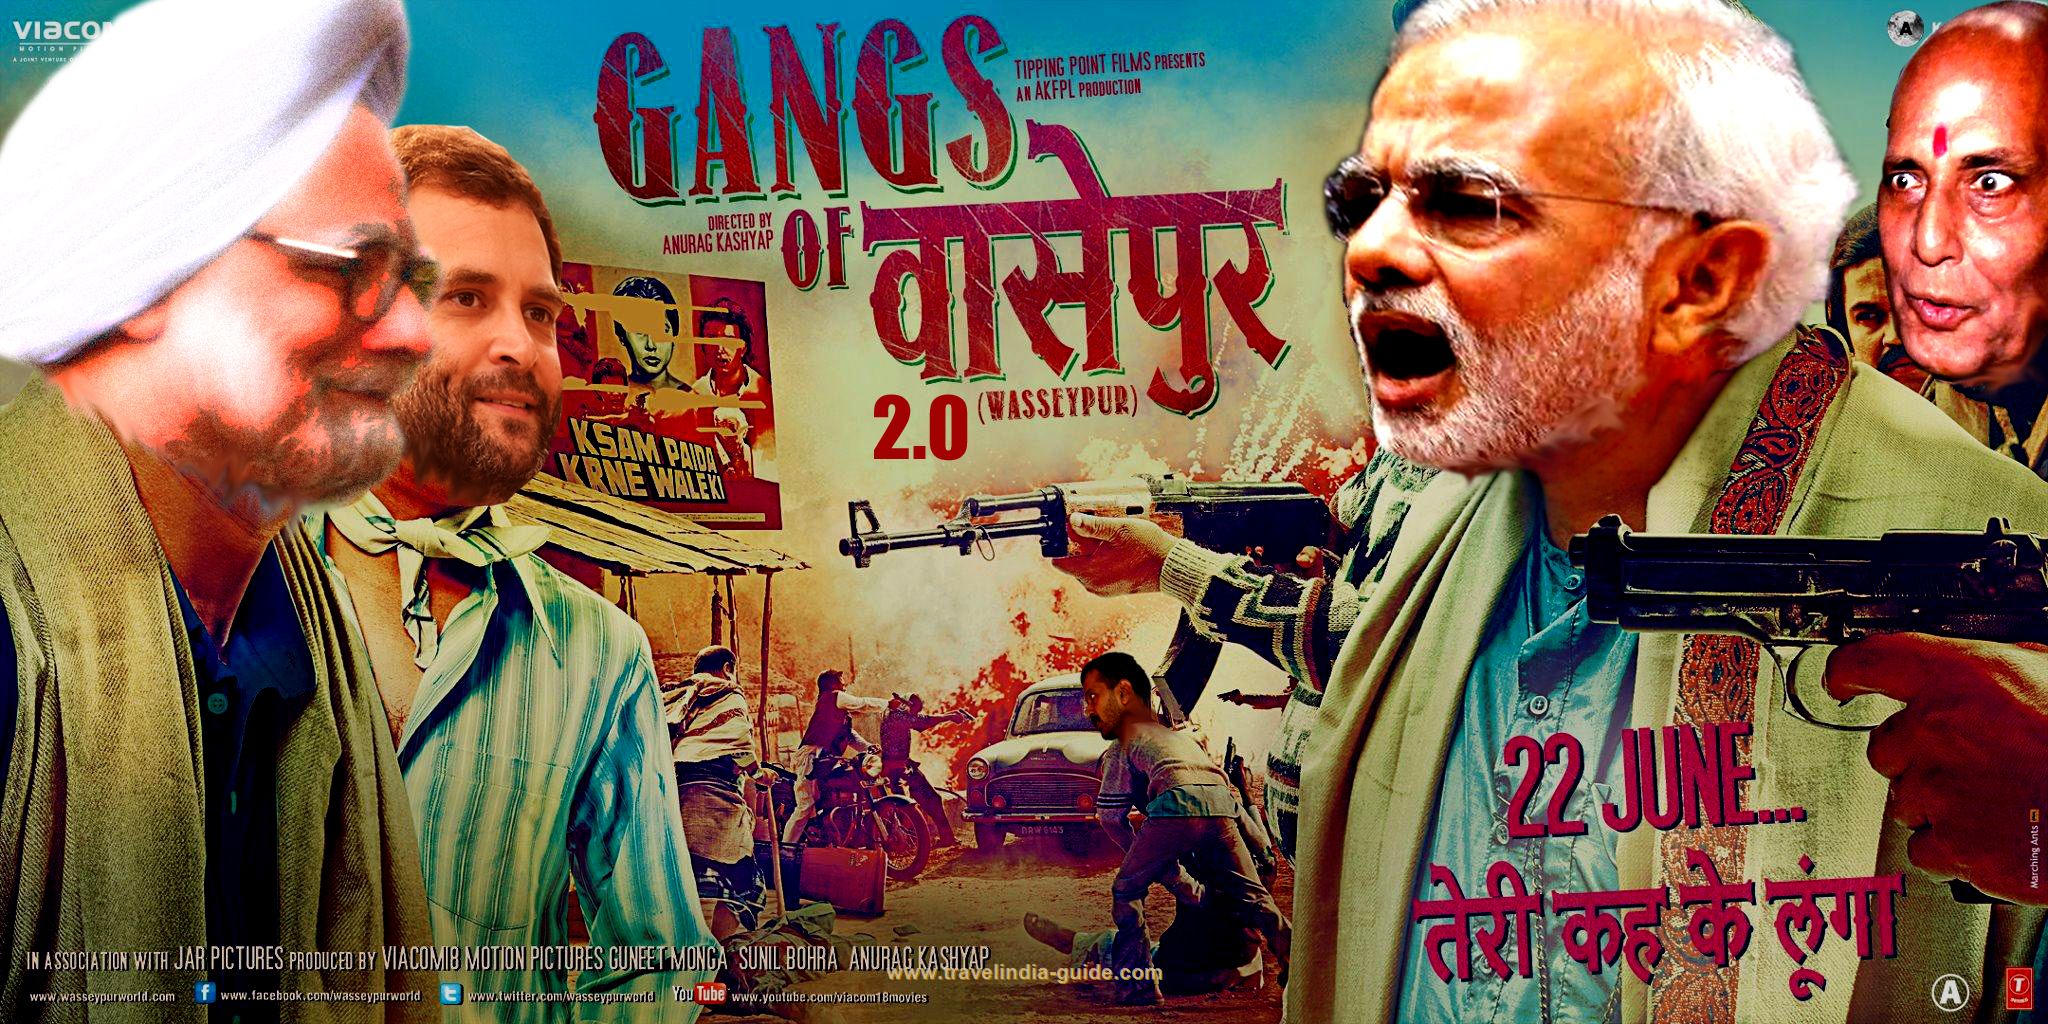 AI reimagines Gangs of Wasseypur as science fiction film